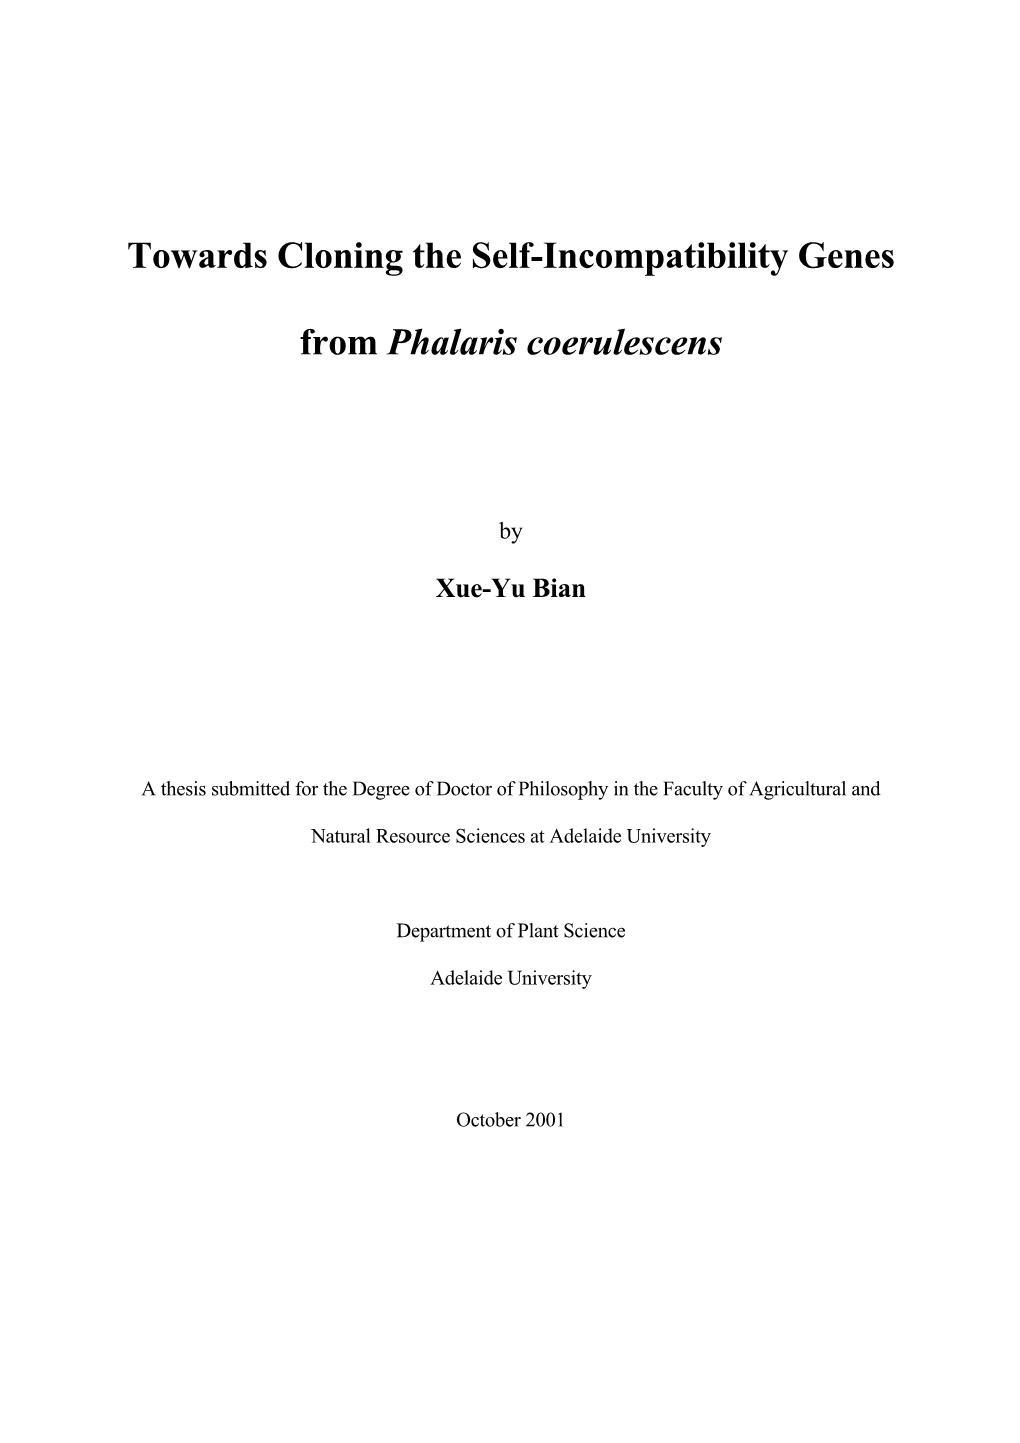 Towards Cloning the Self-Incompatibility Genes from Phalaris Coerulescens Iii